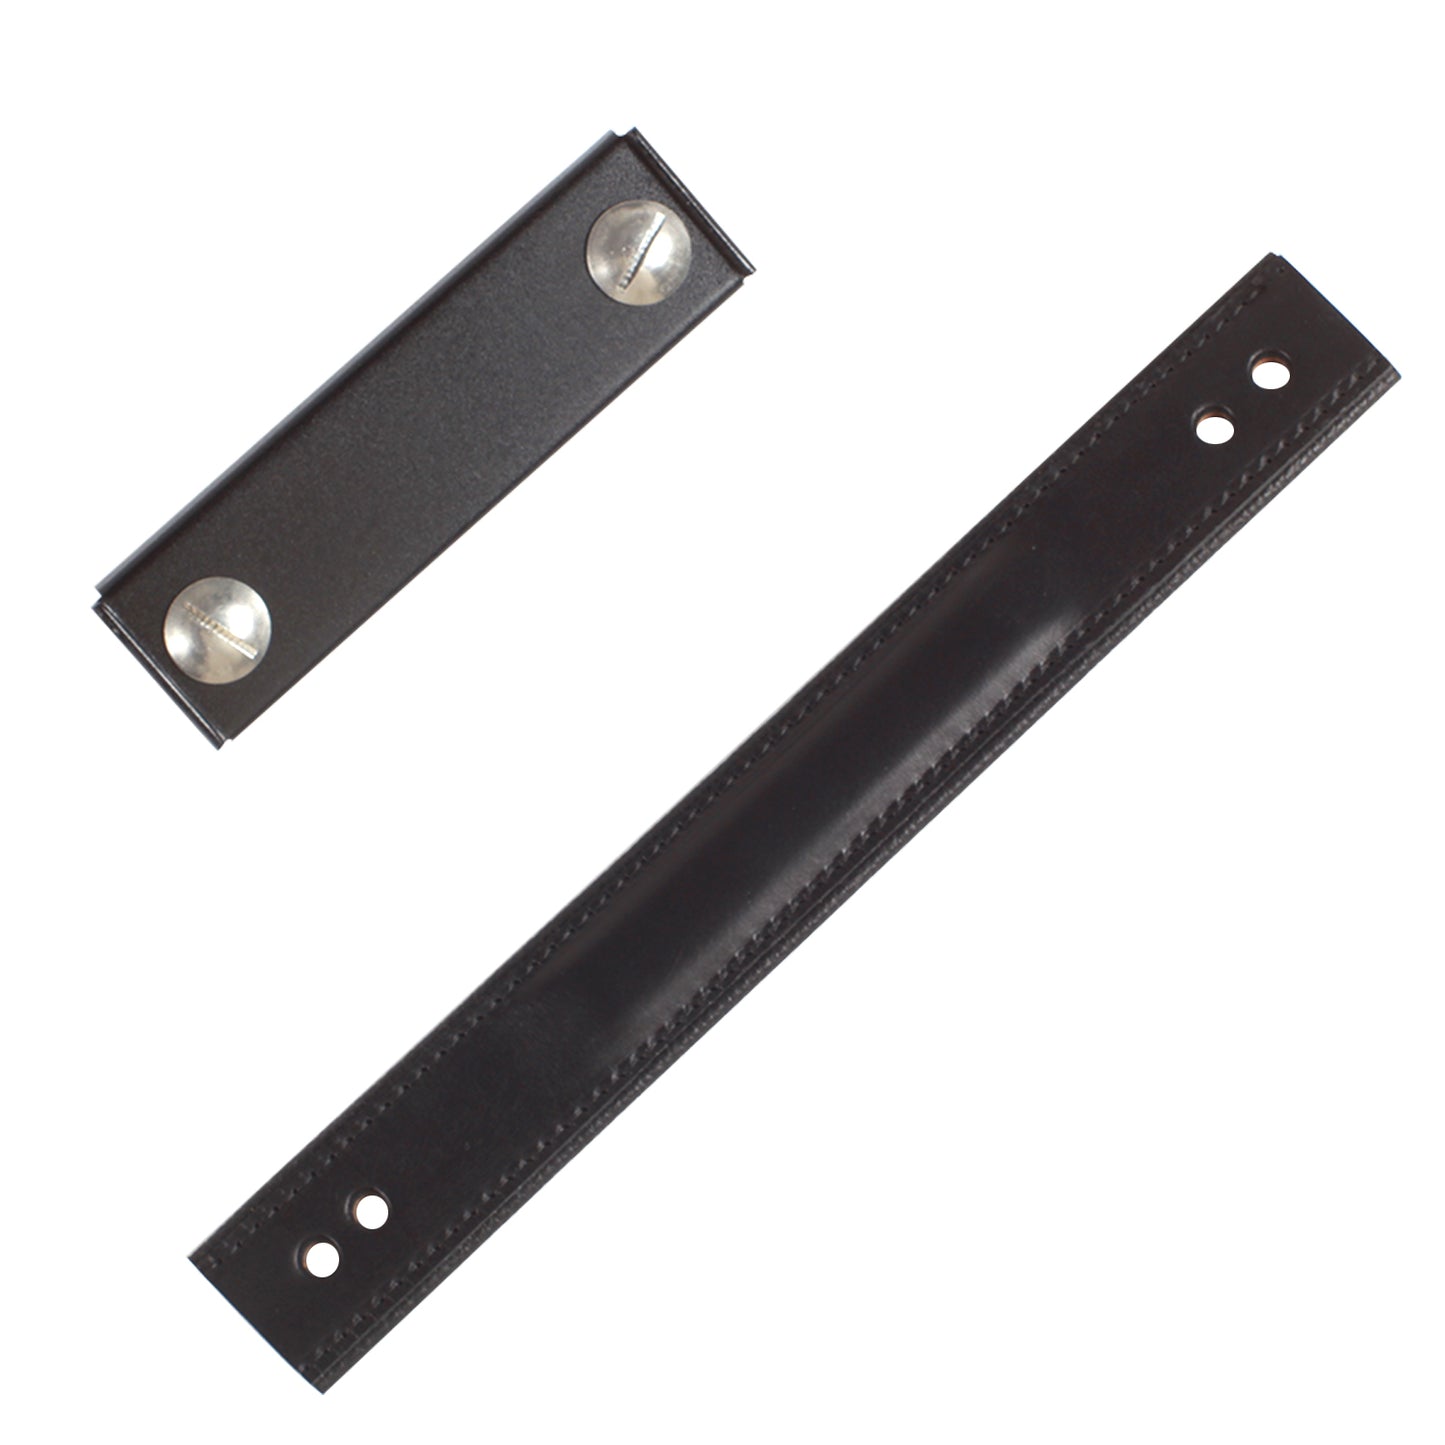 Leather Hand Wrist Strap Belt Hanger Grip for ALL Linhof 4x5" Camera Technika IV V 45RF Kardan Color Toyo 45A 45A II